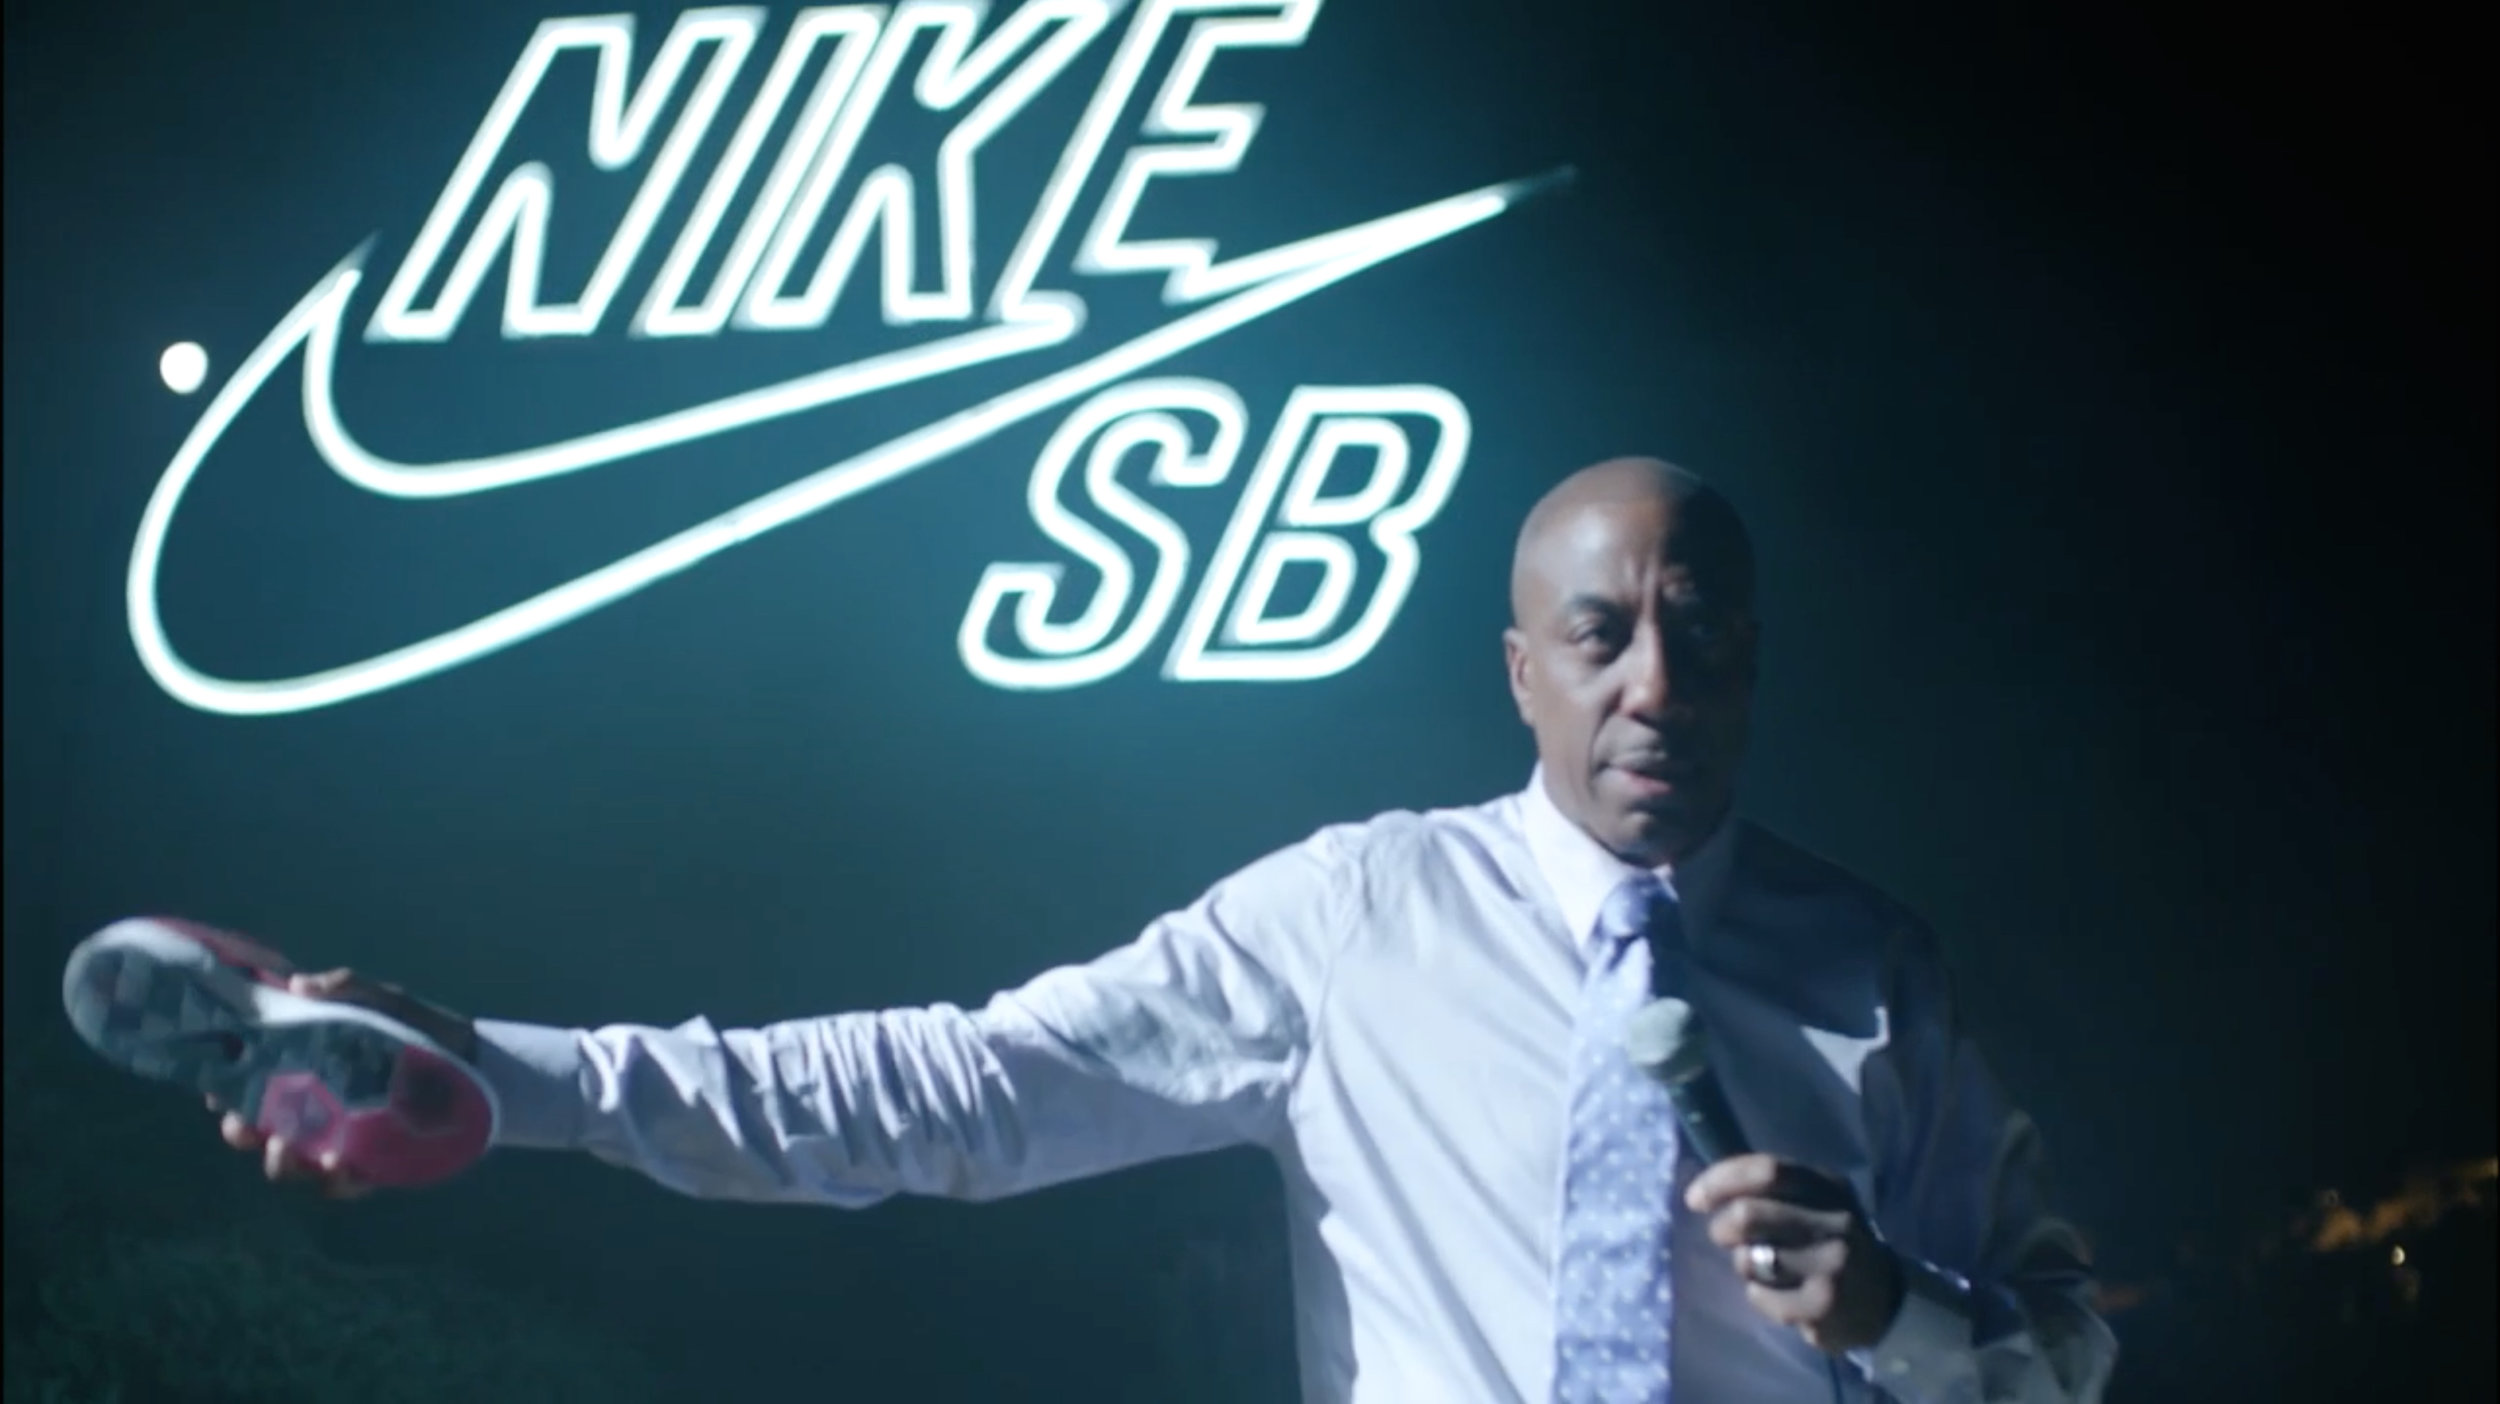 Nike SB - Smoove with Sign and Shoe.jpg